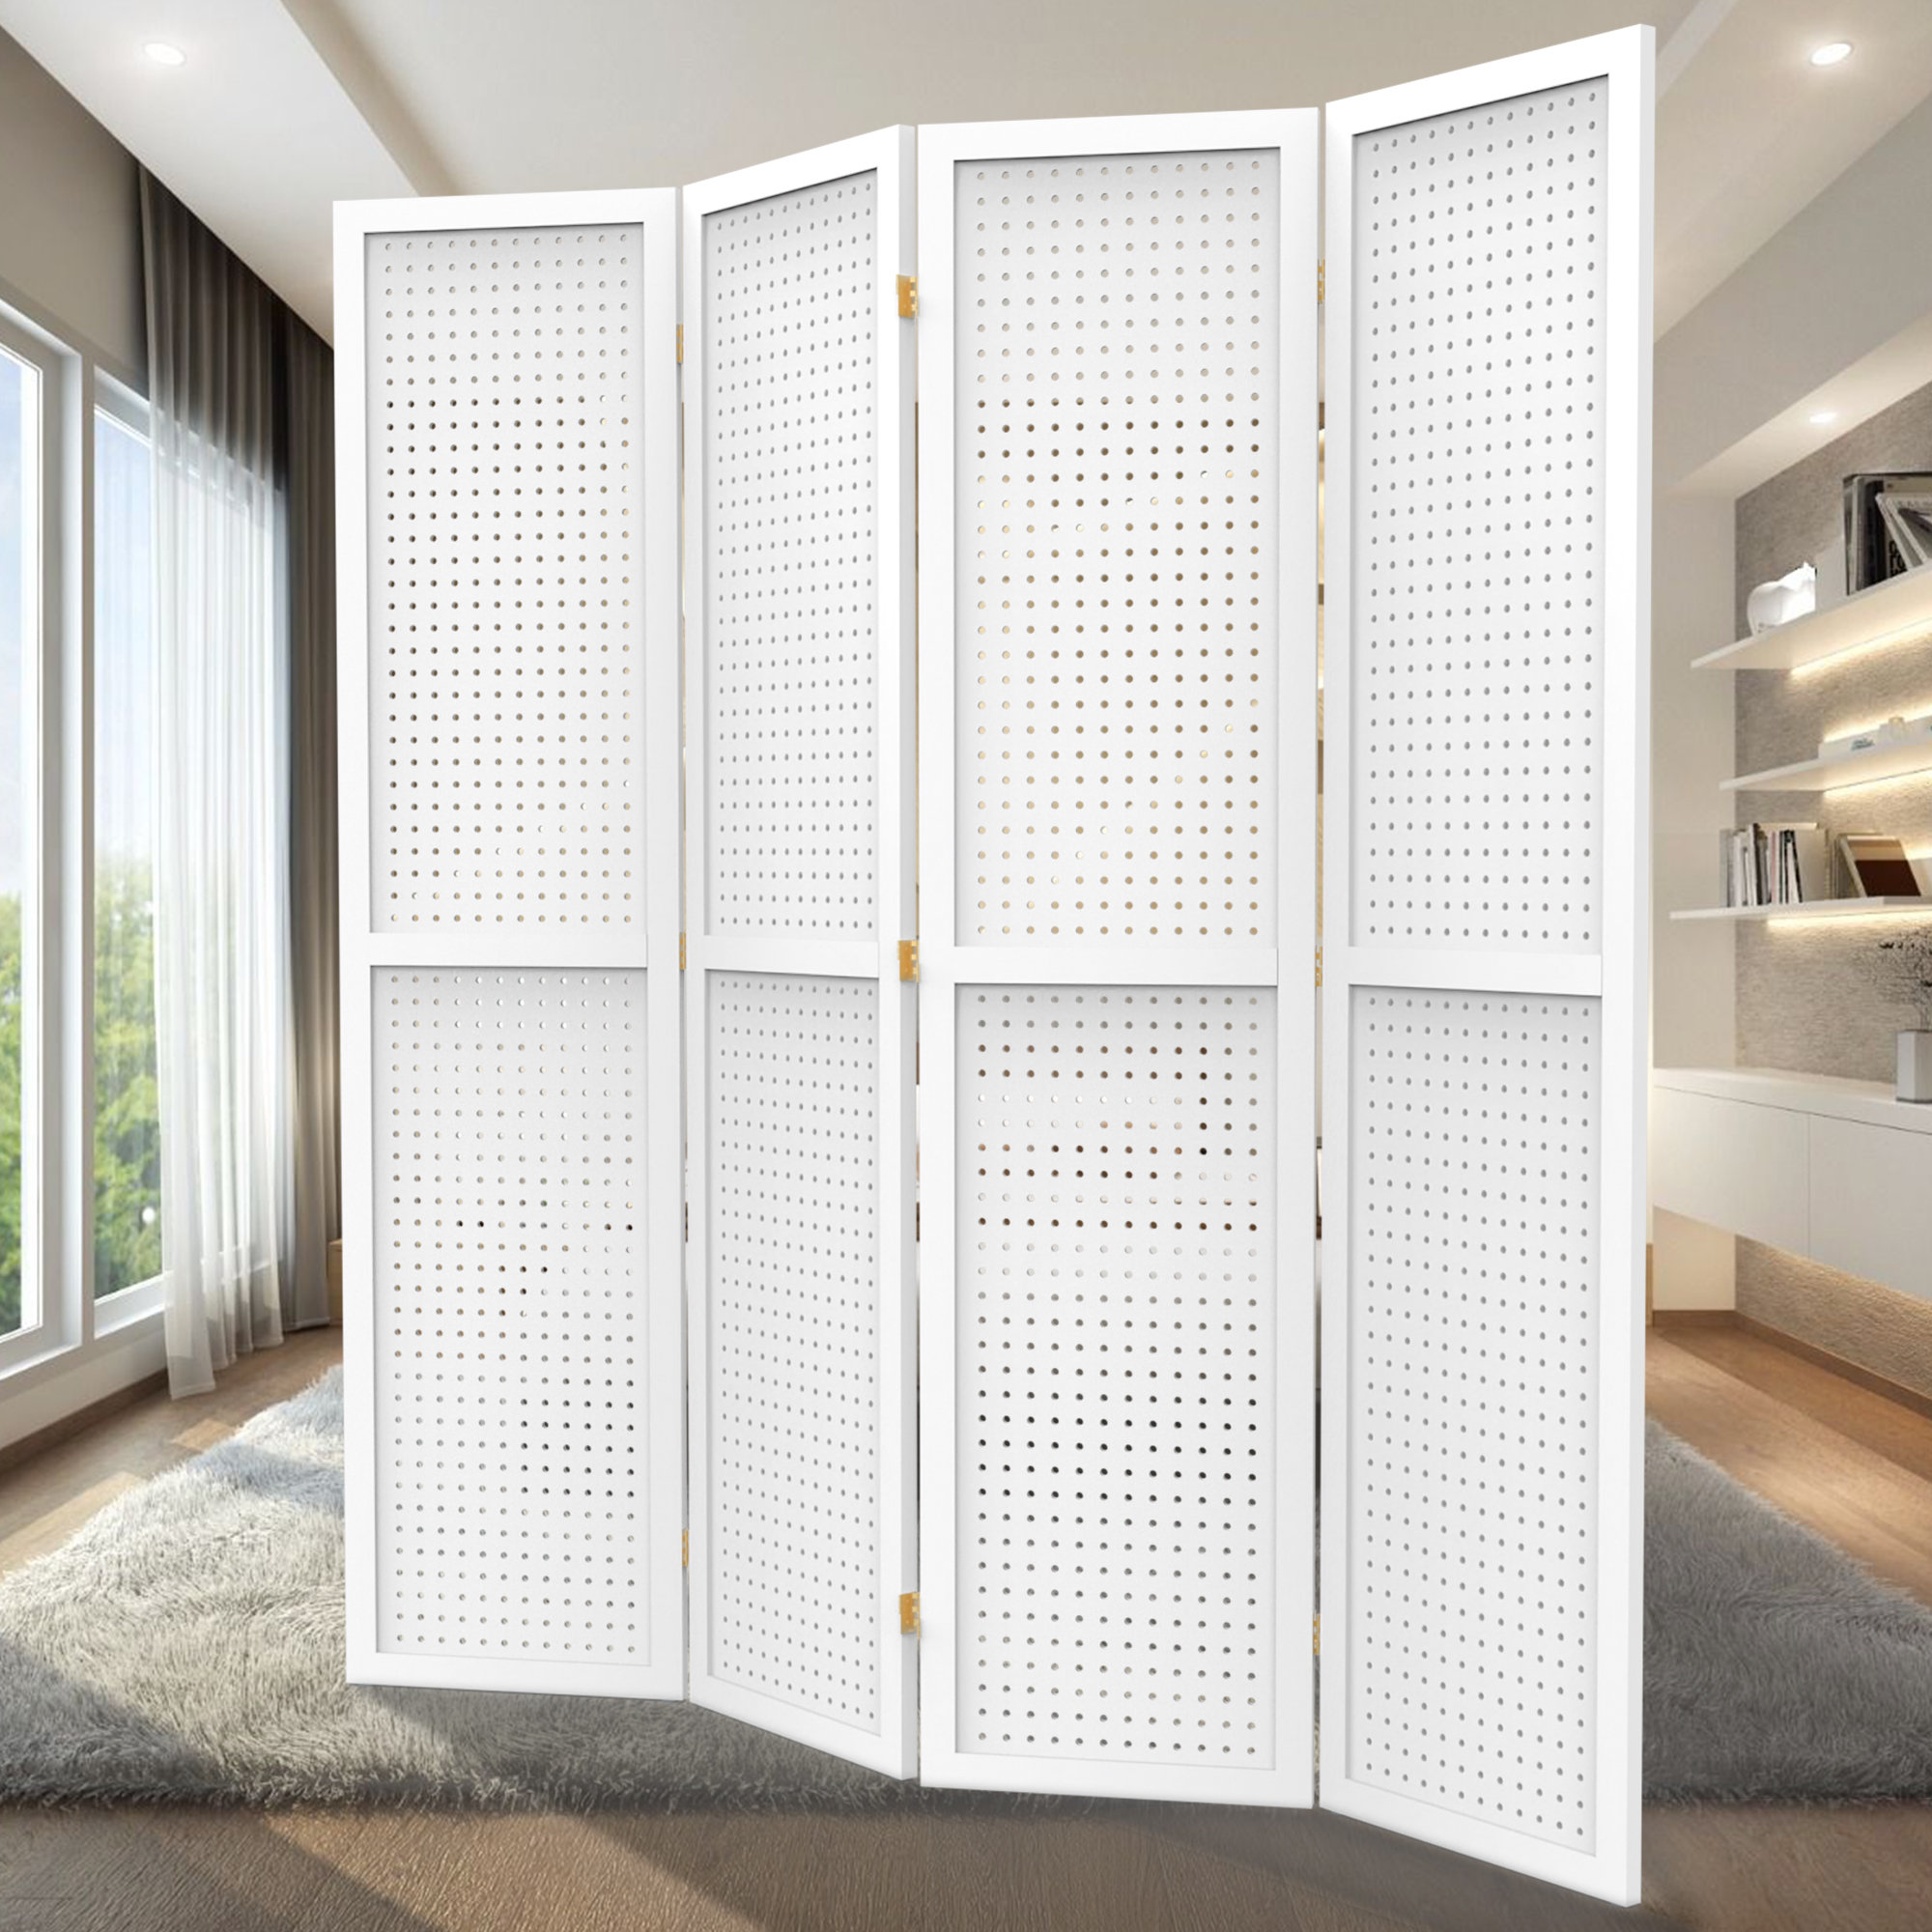 Double-Sided Freestanding Art Storage Screen, Art Panel Systems, Storage  & Handling Equipment